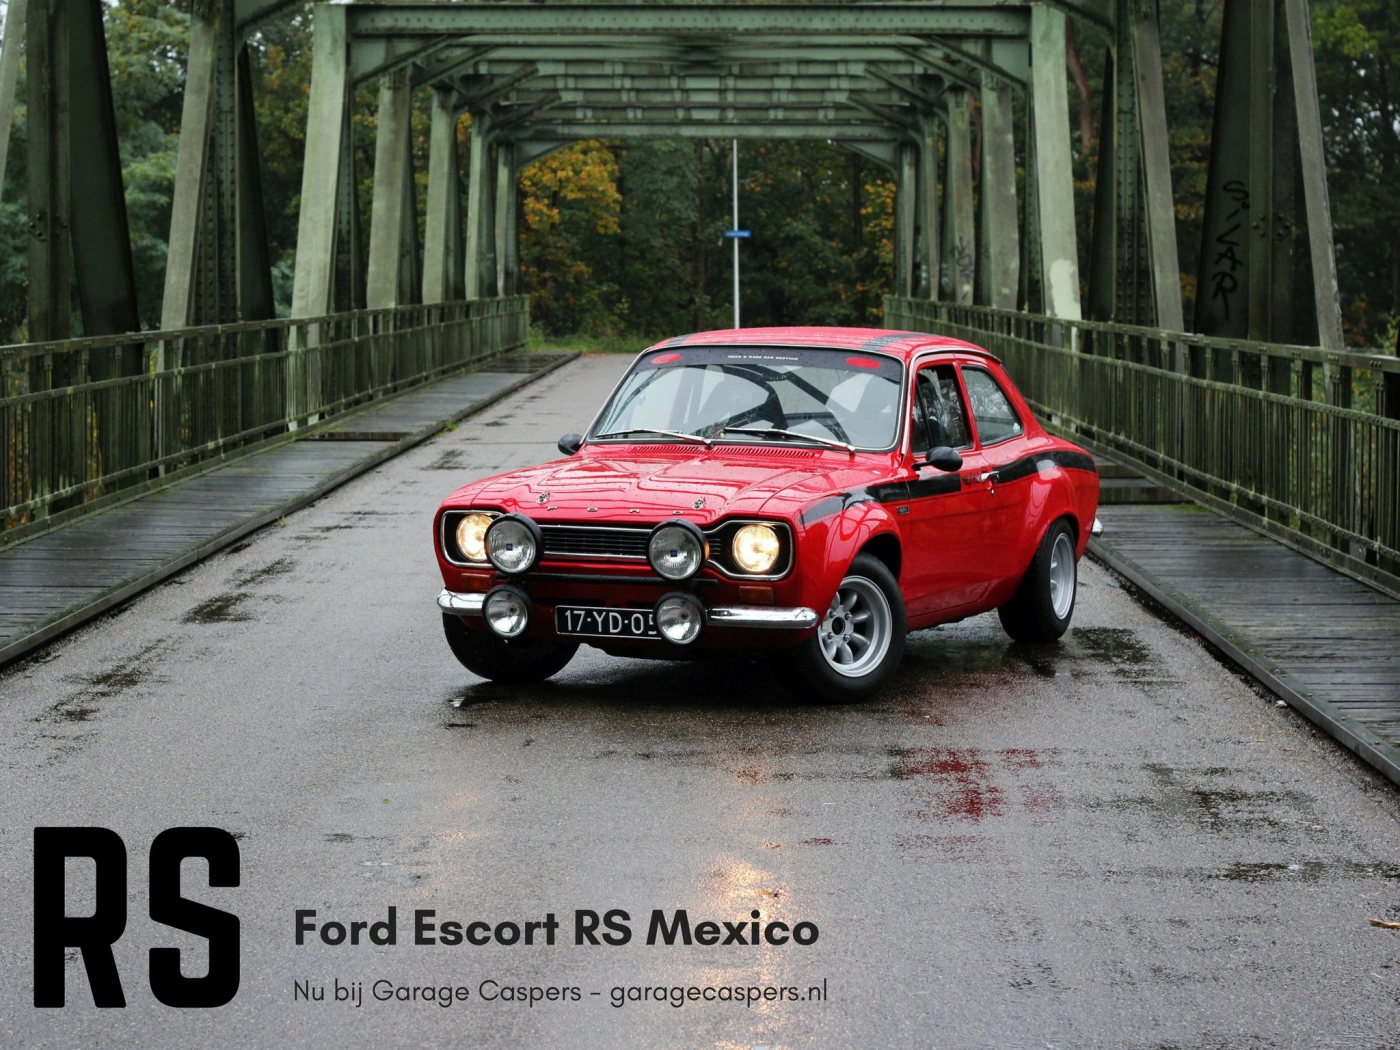 Afbeelding als illustratie bij artikel Ford Escort RS Mexico gefeatured in Parked in Holland